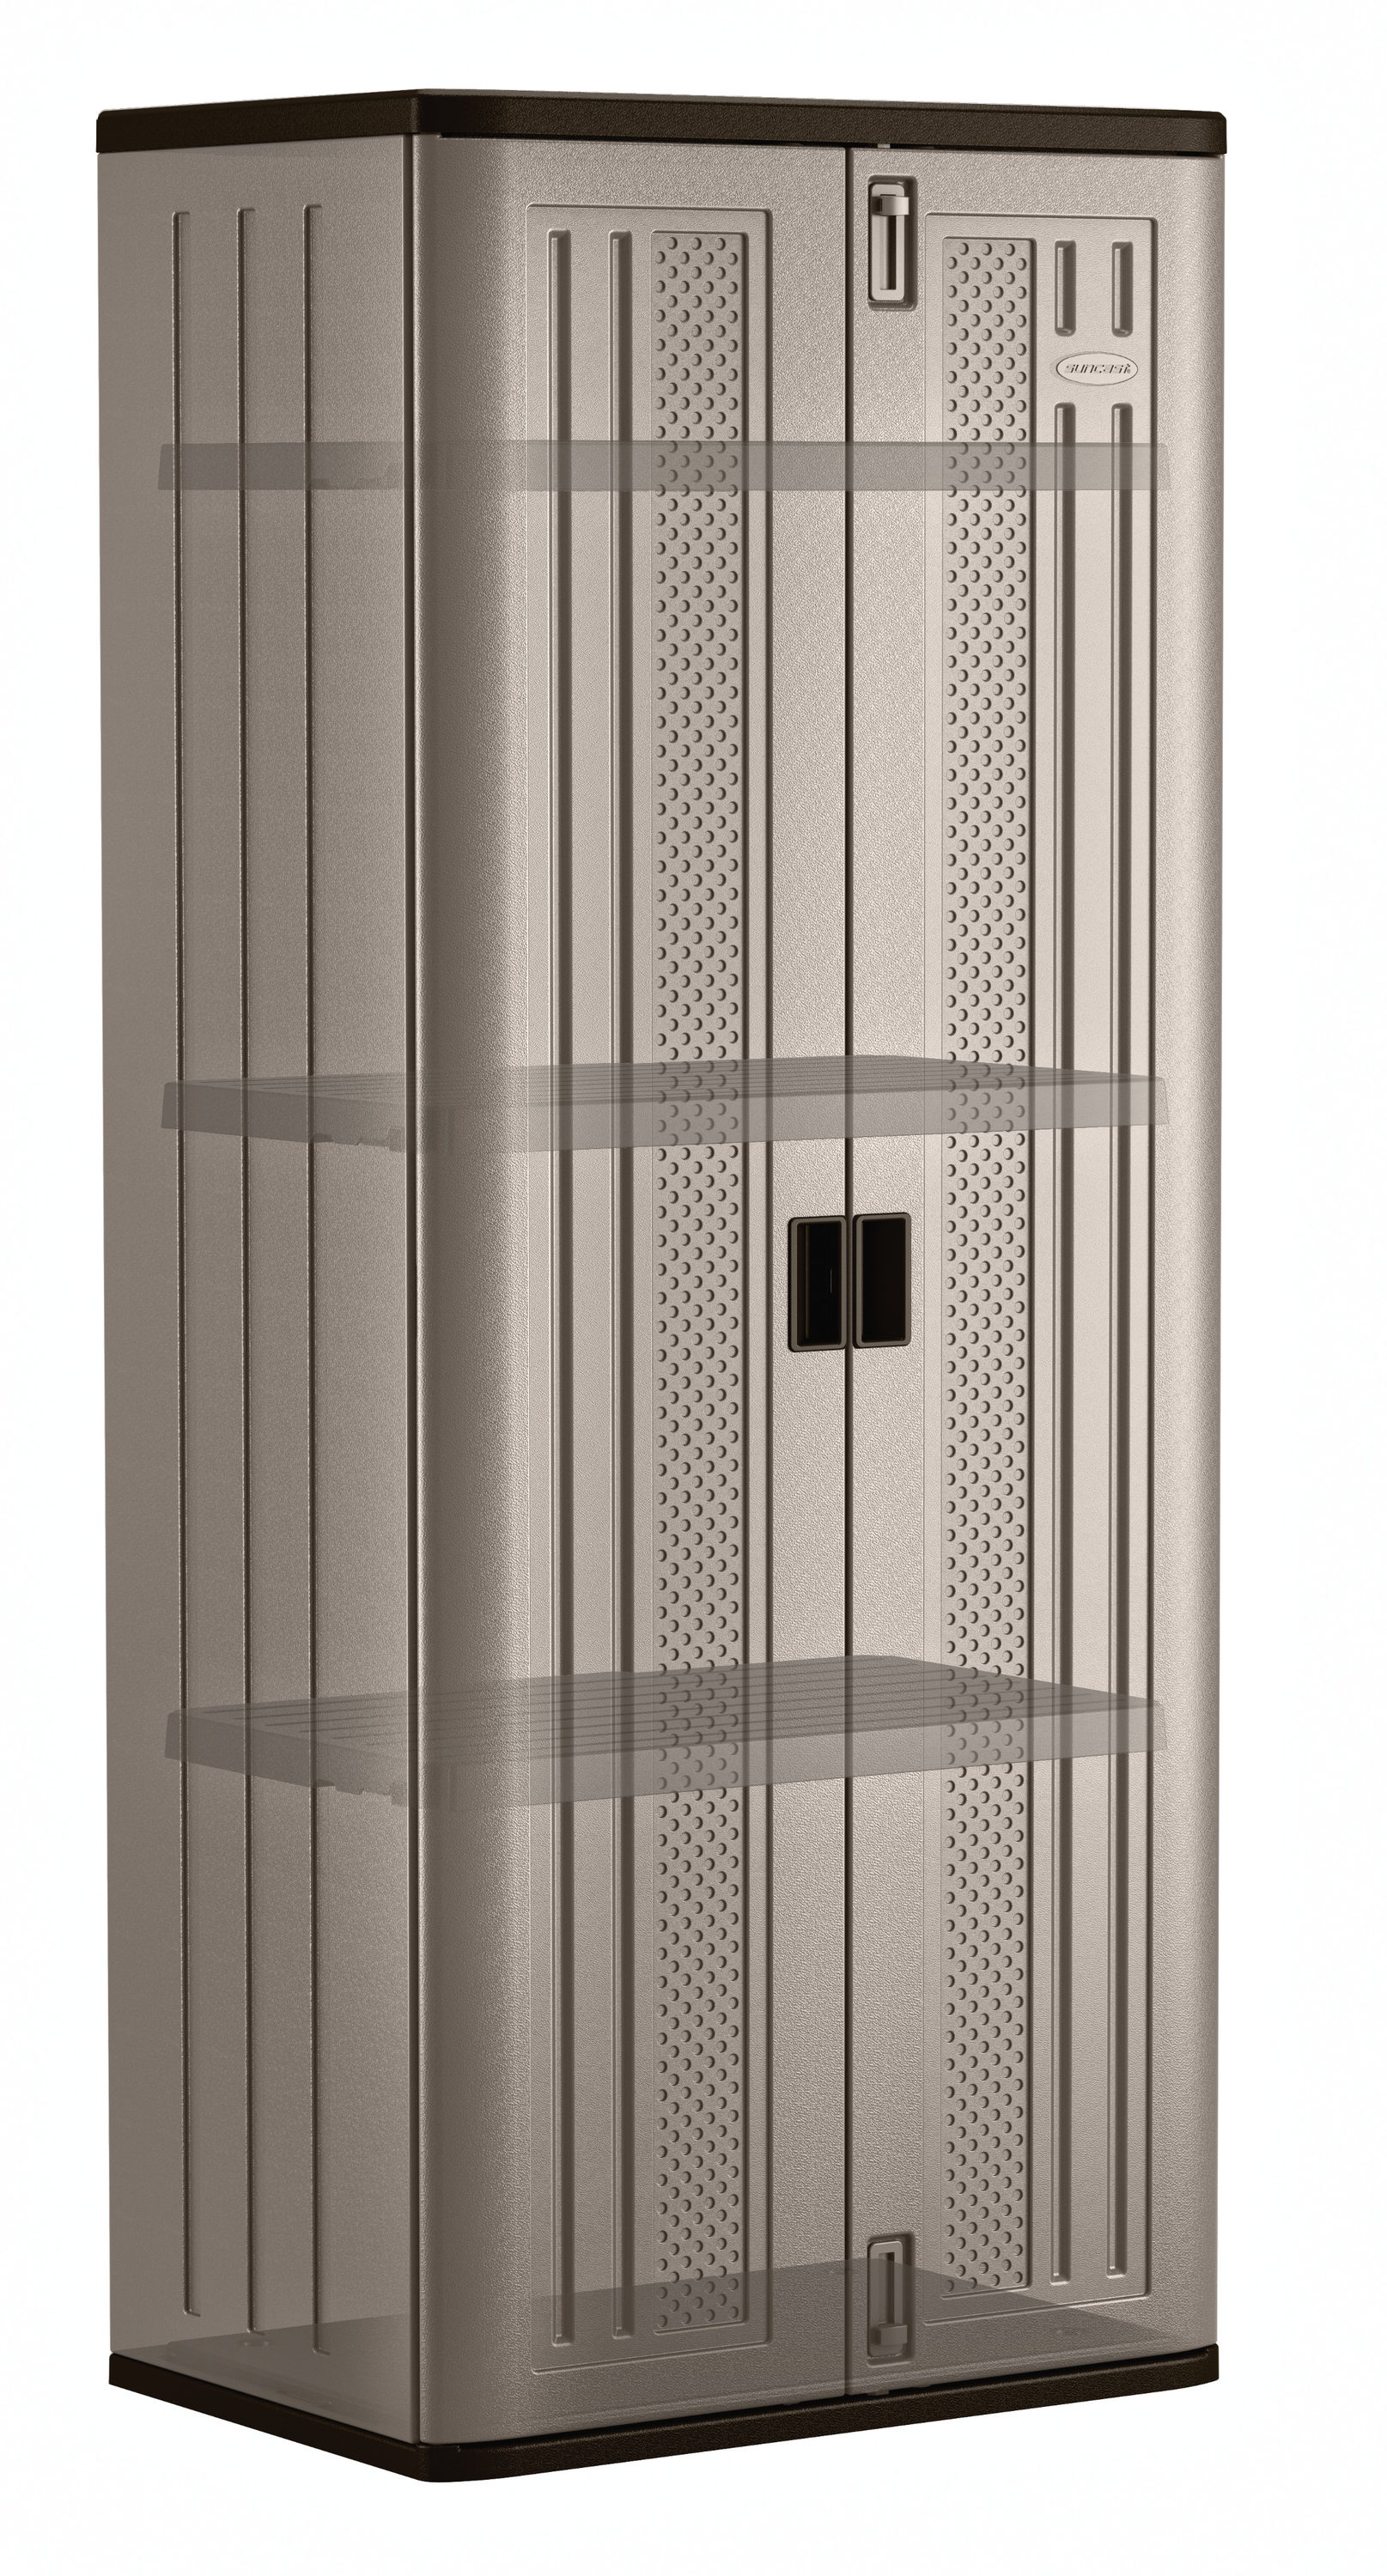 Suncast Freestanding Cabinet Storage 225 lb Capacity 3-Shelf Resin Platinum 